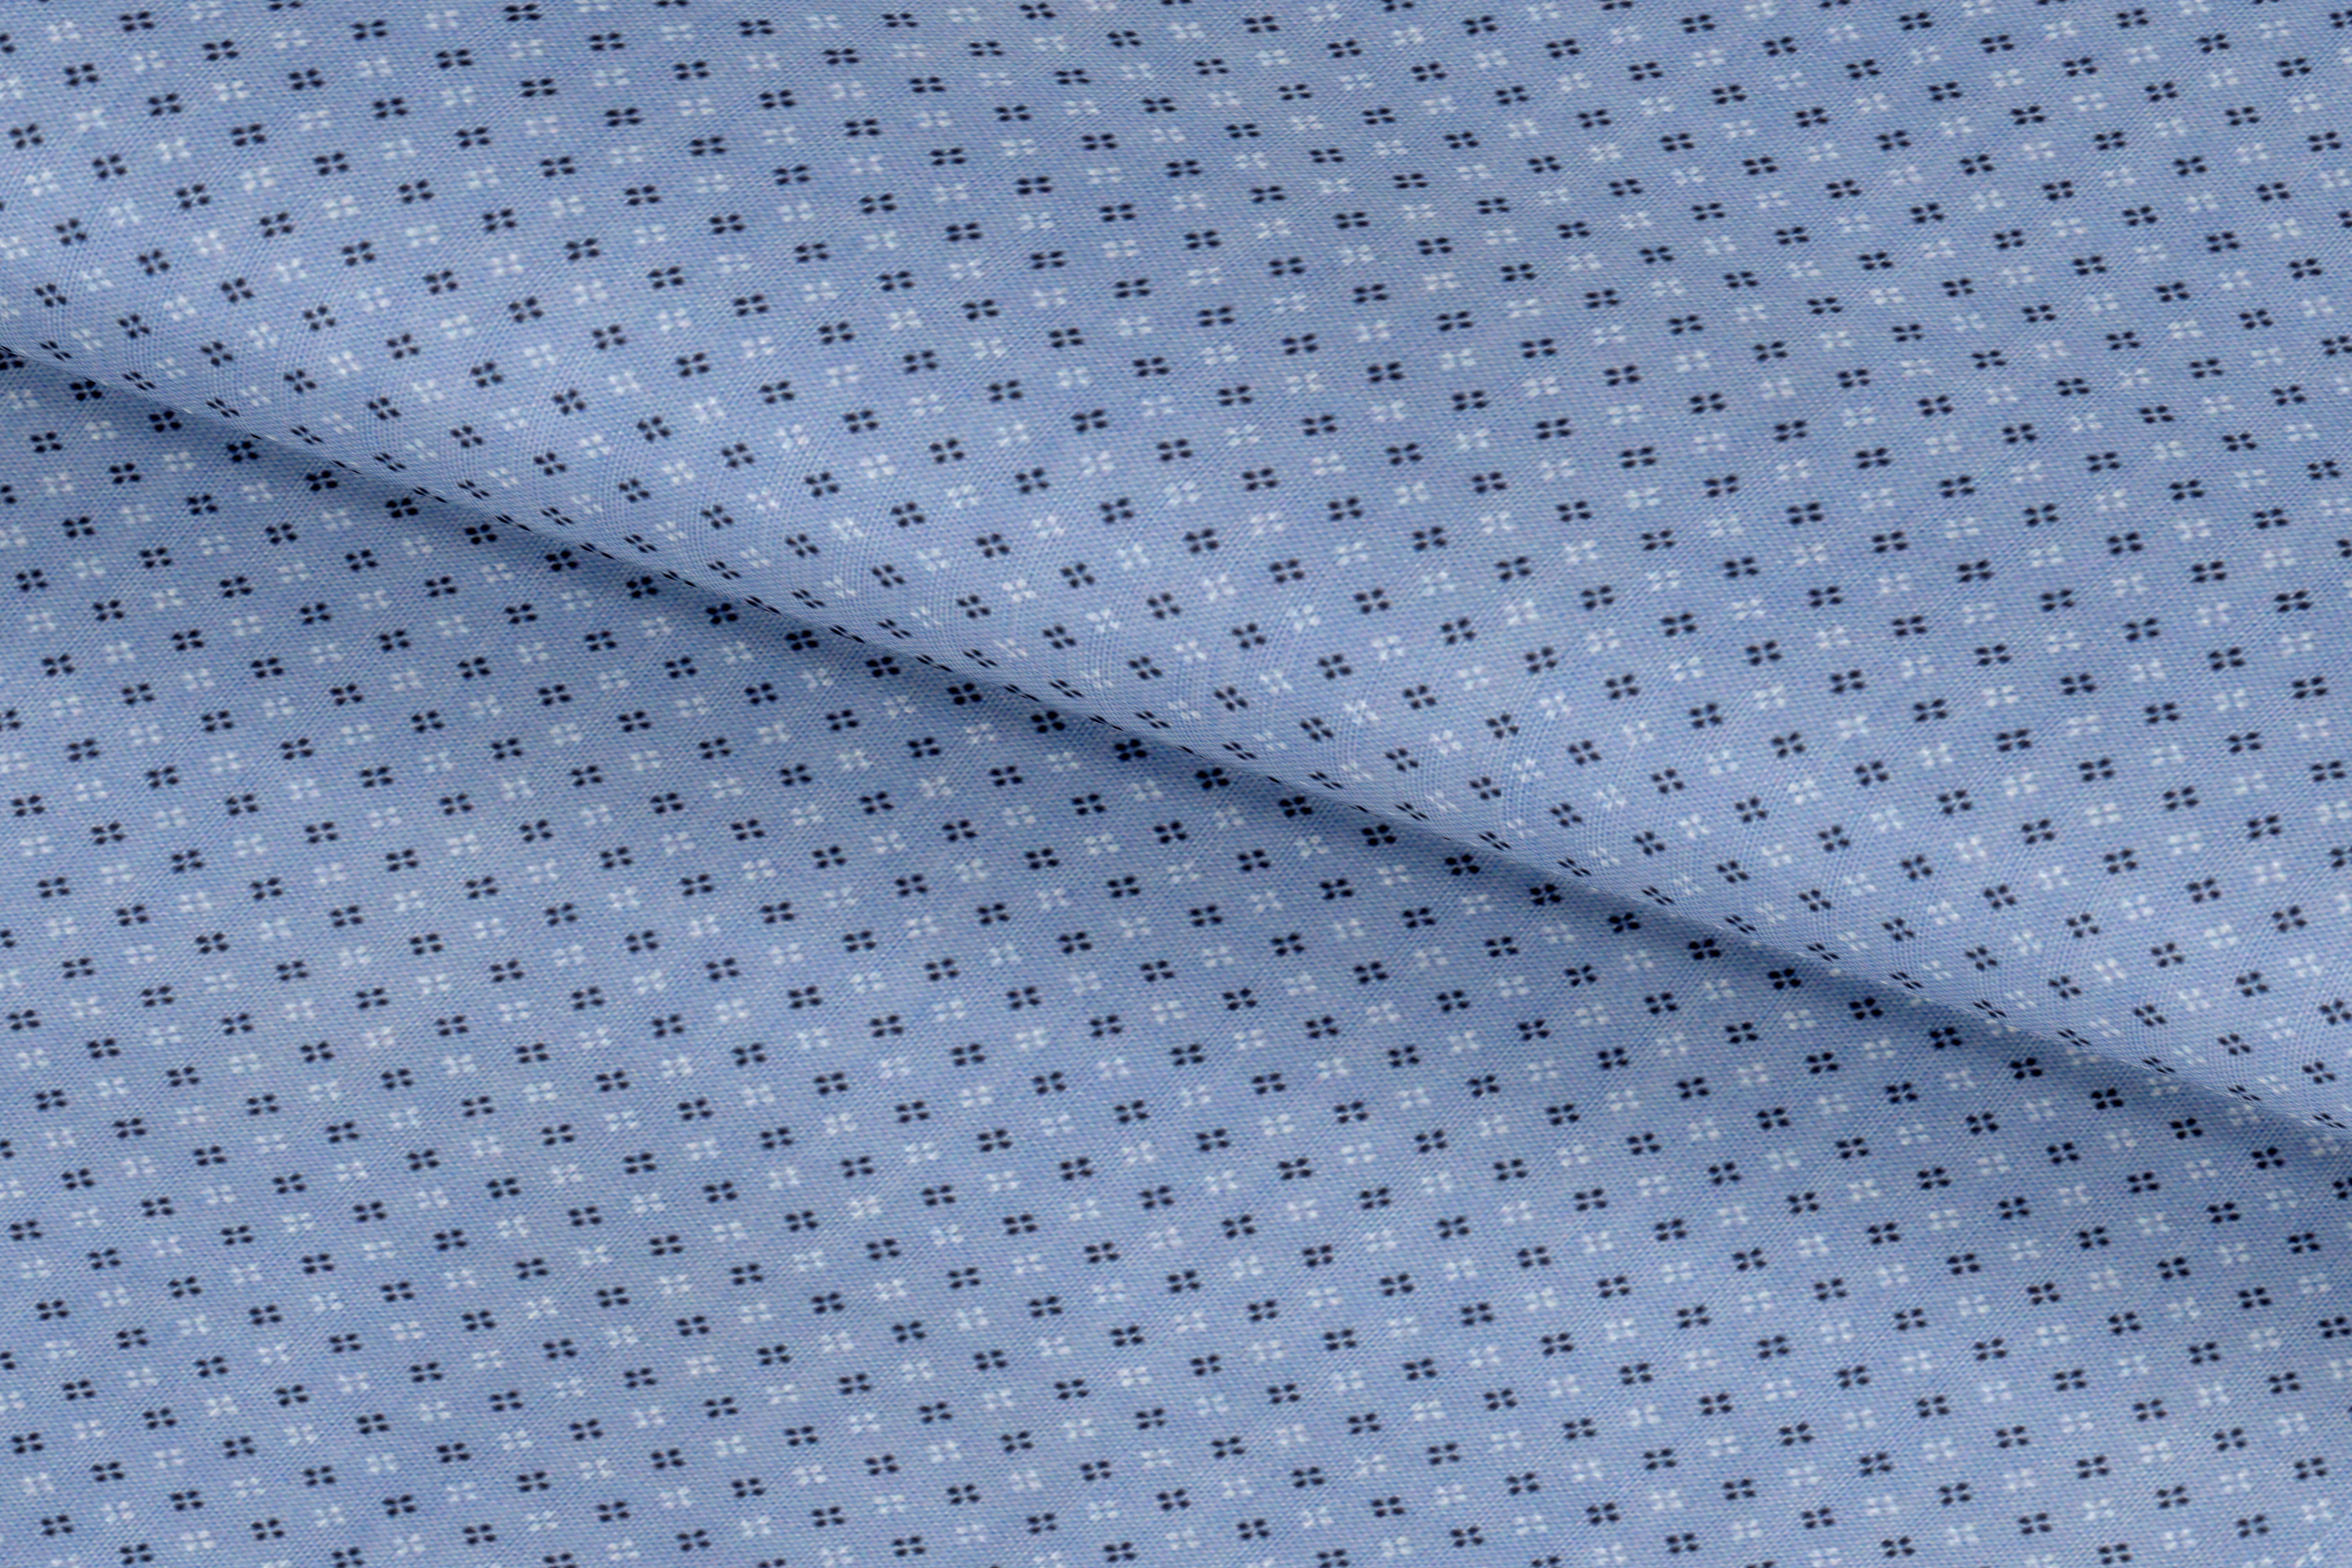 Blue and White Pinwheels Shirt / PRT-62